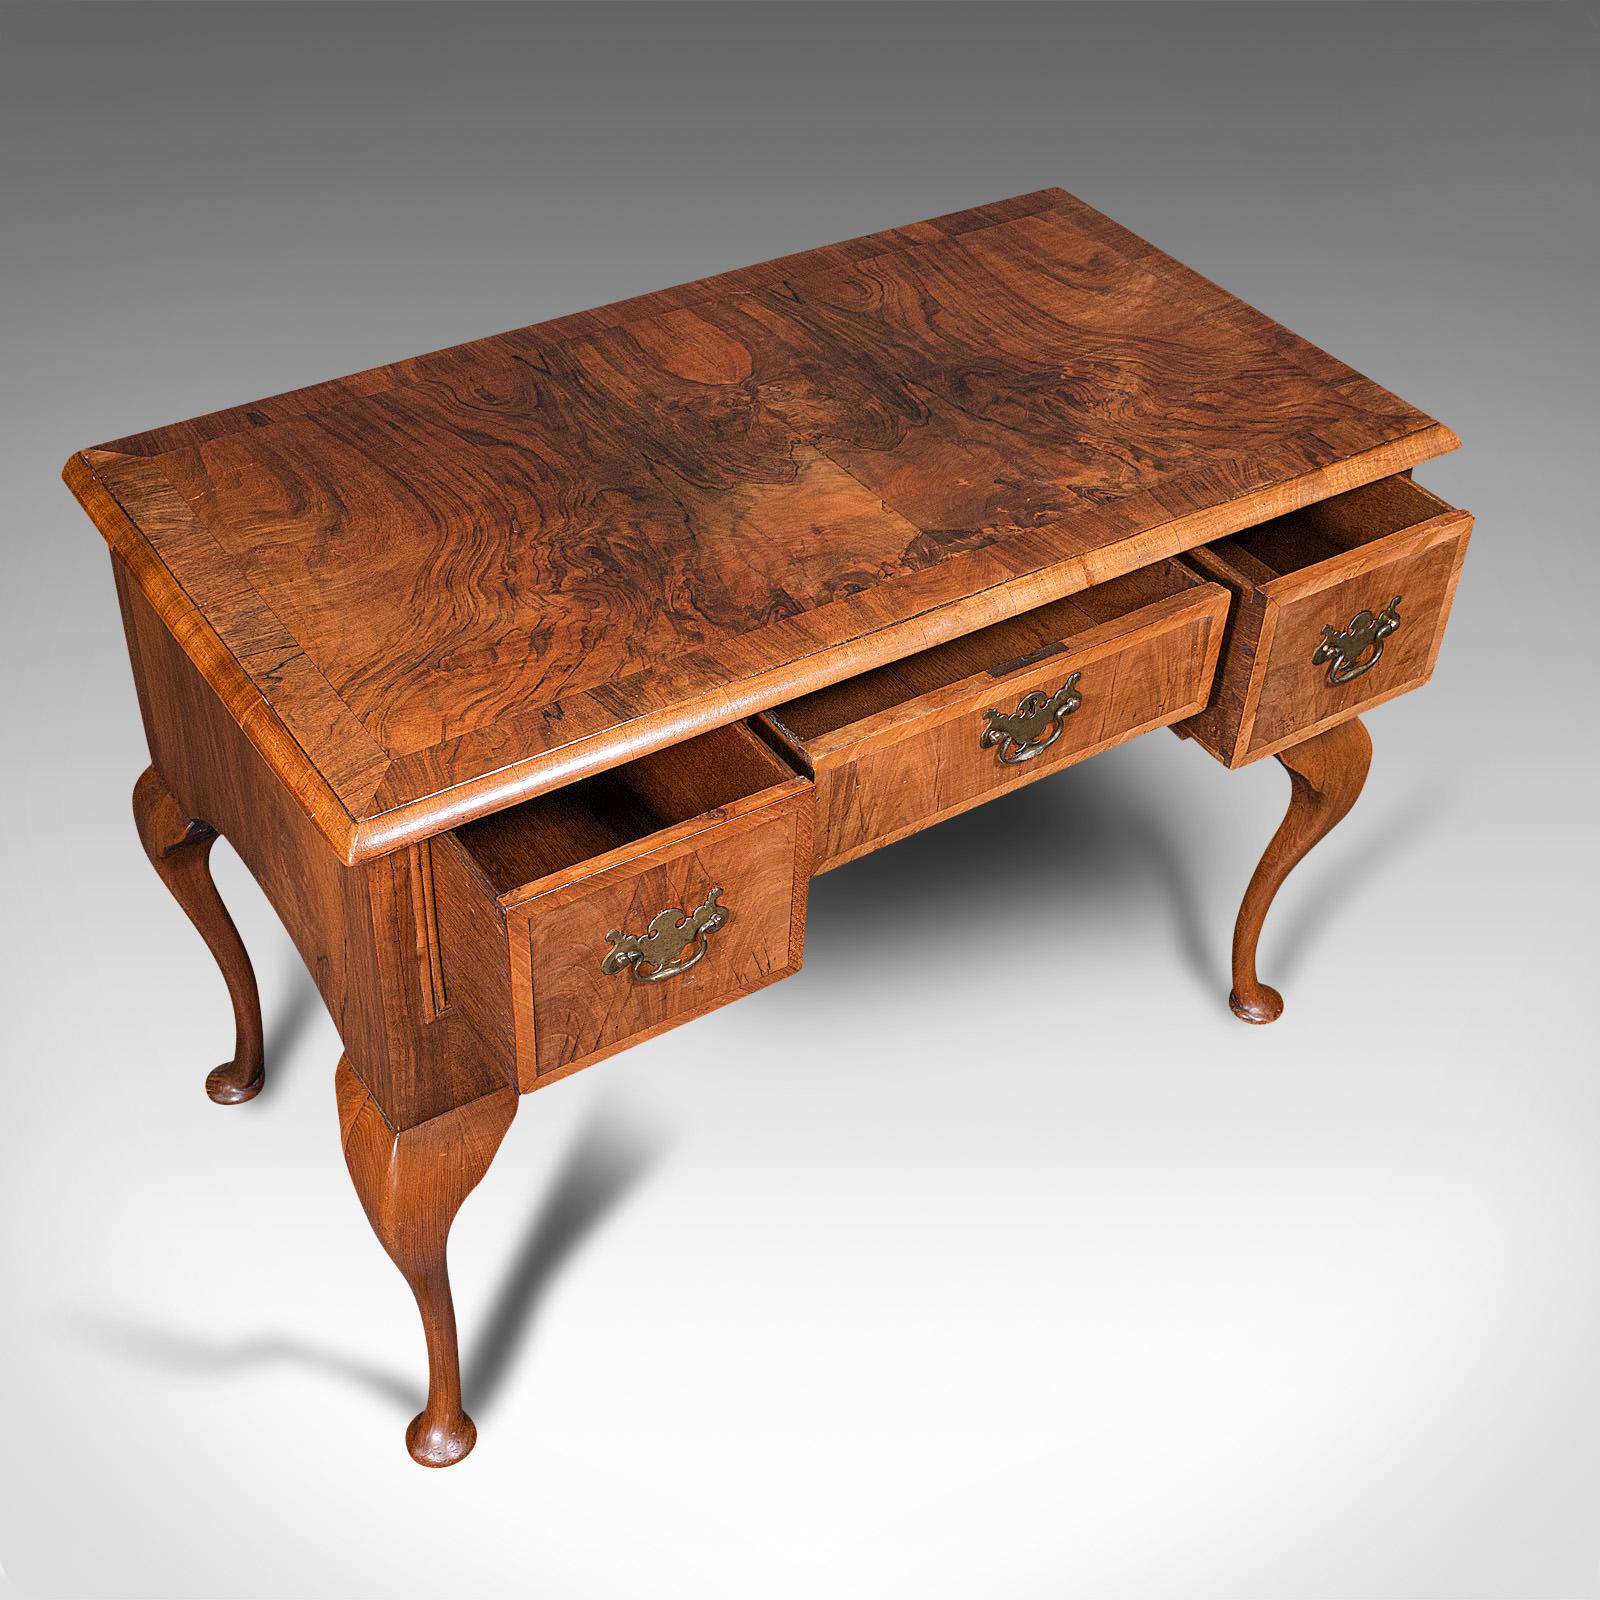 Antique Writing Desk, English, Burr Walnut, Oak, Lowboy, Table, Georgian, C.1800 1